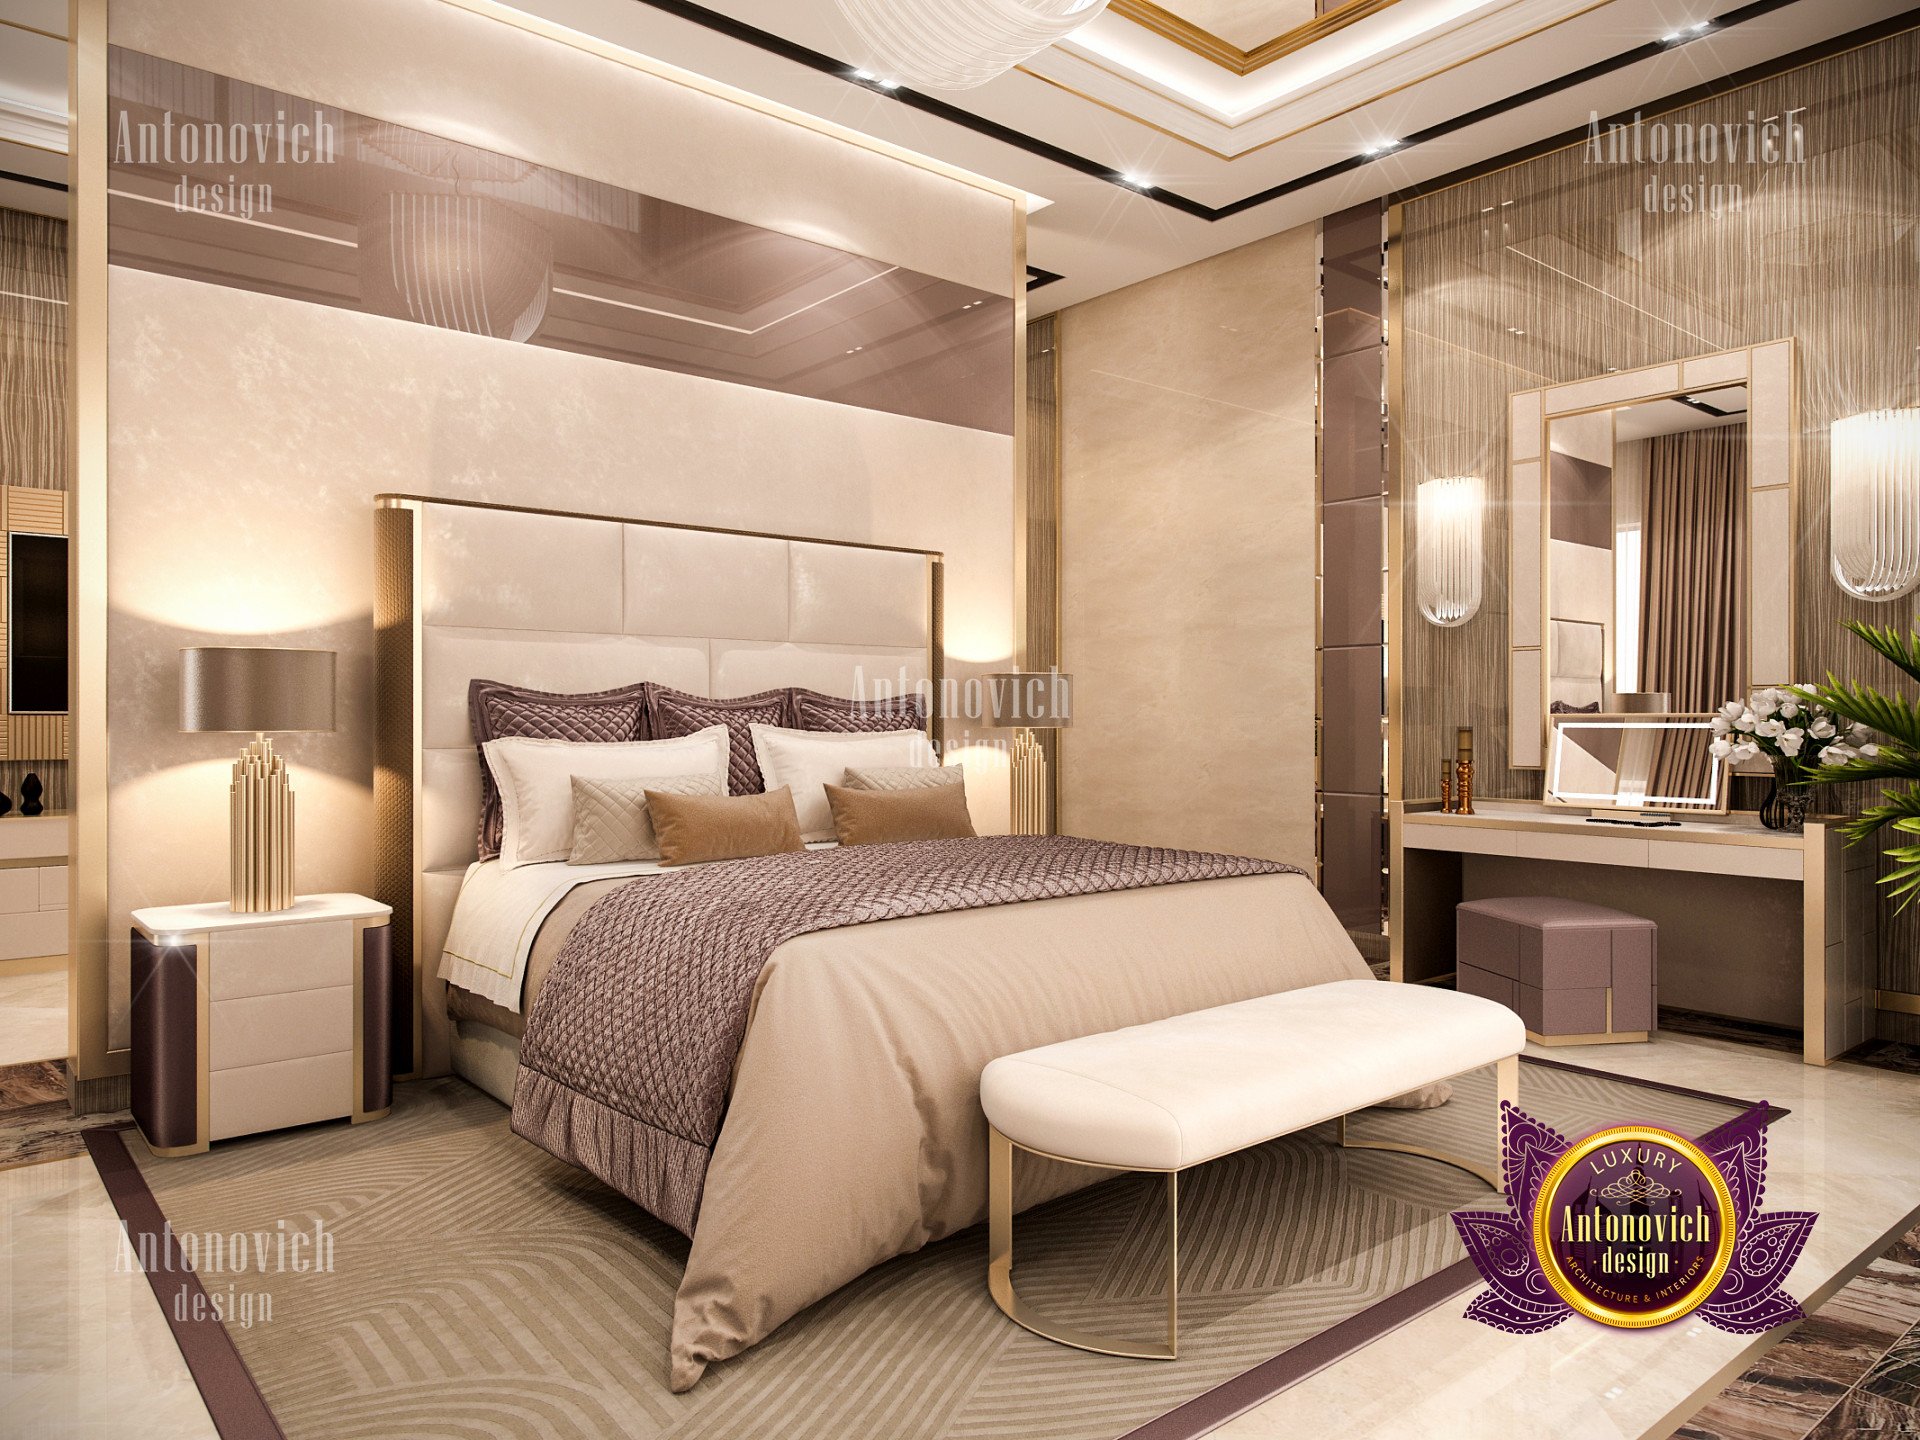 Nice bedroom interior - luxury interior design company in ...